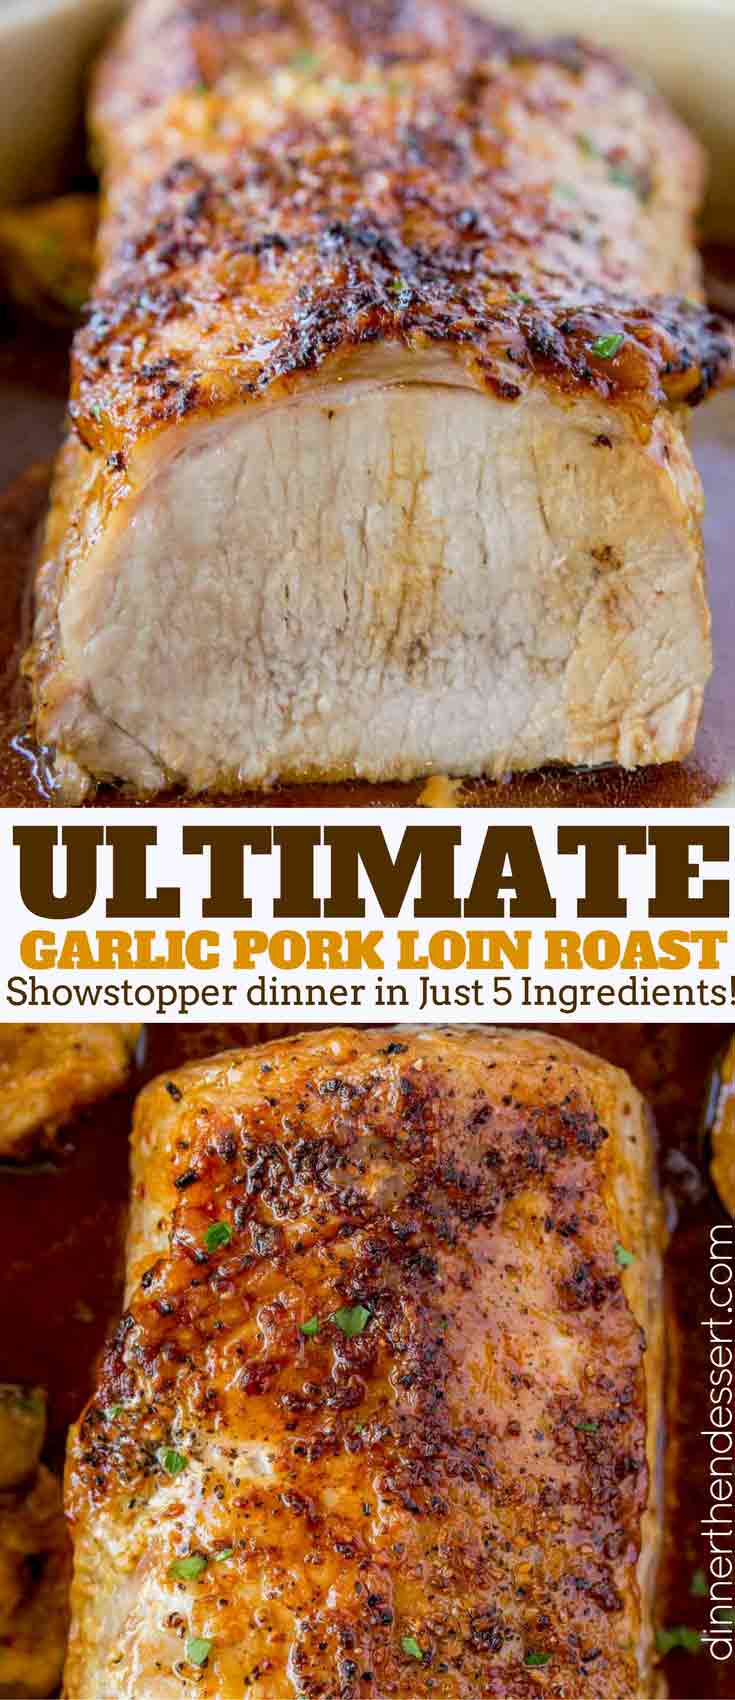 Ultimate Garlic Pork Loin Roast Dinner Then Dessert,Two Player Card Games